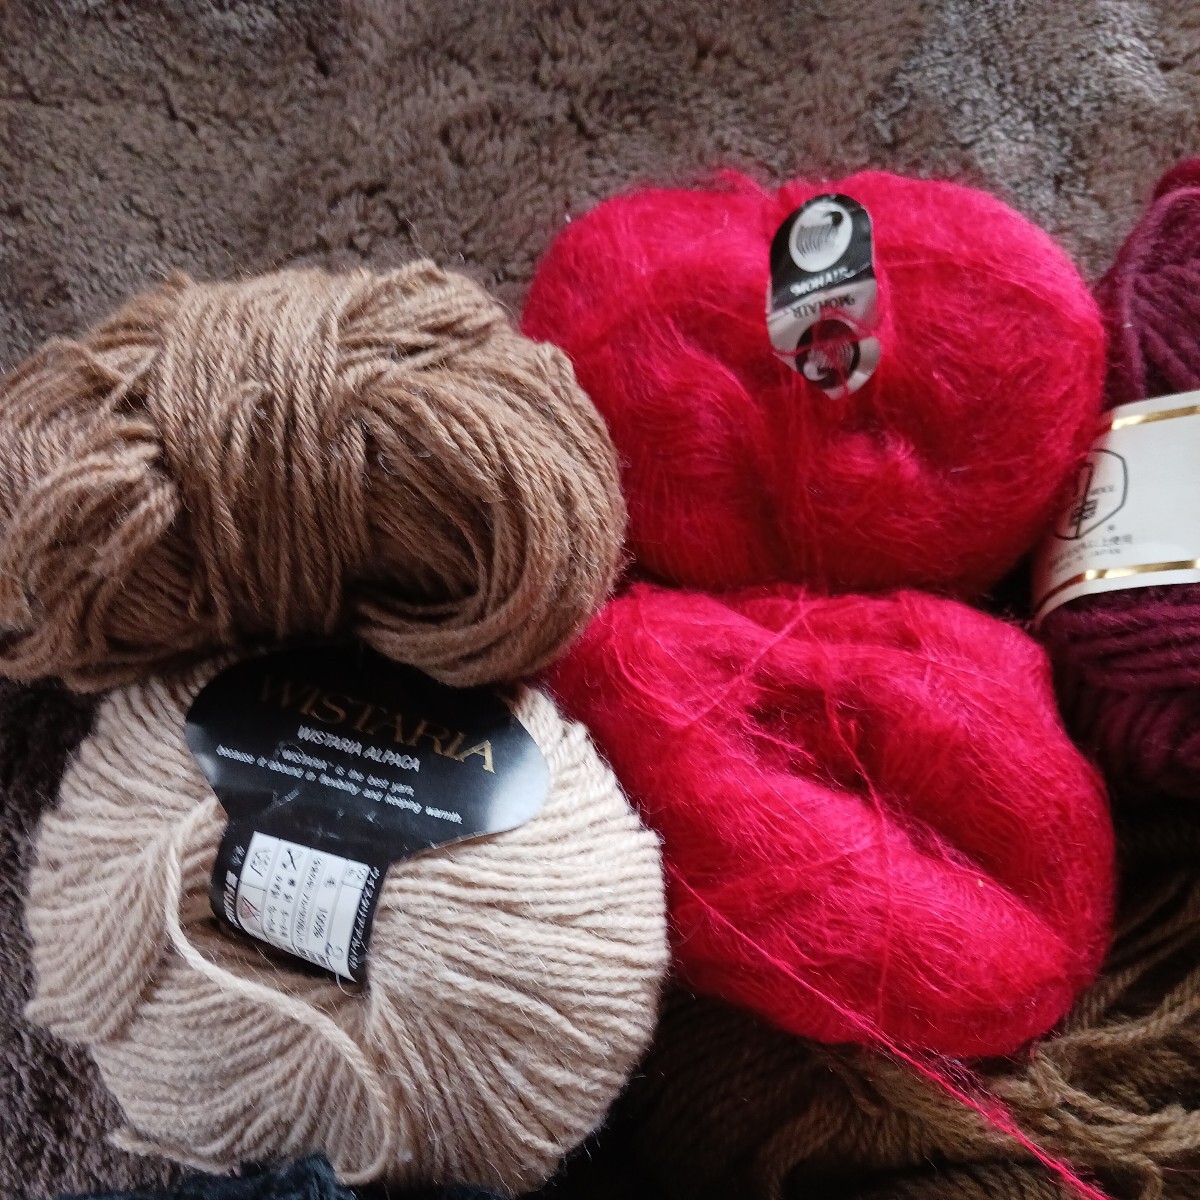  knitting wool knitting various together 